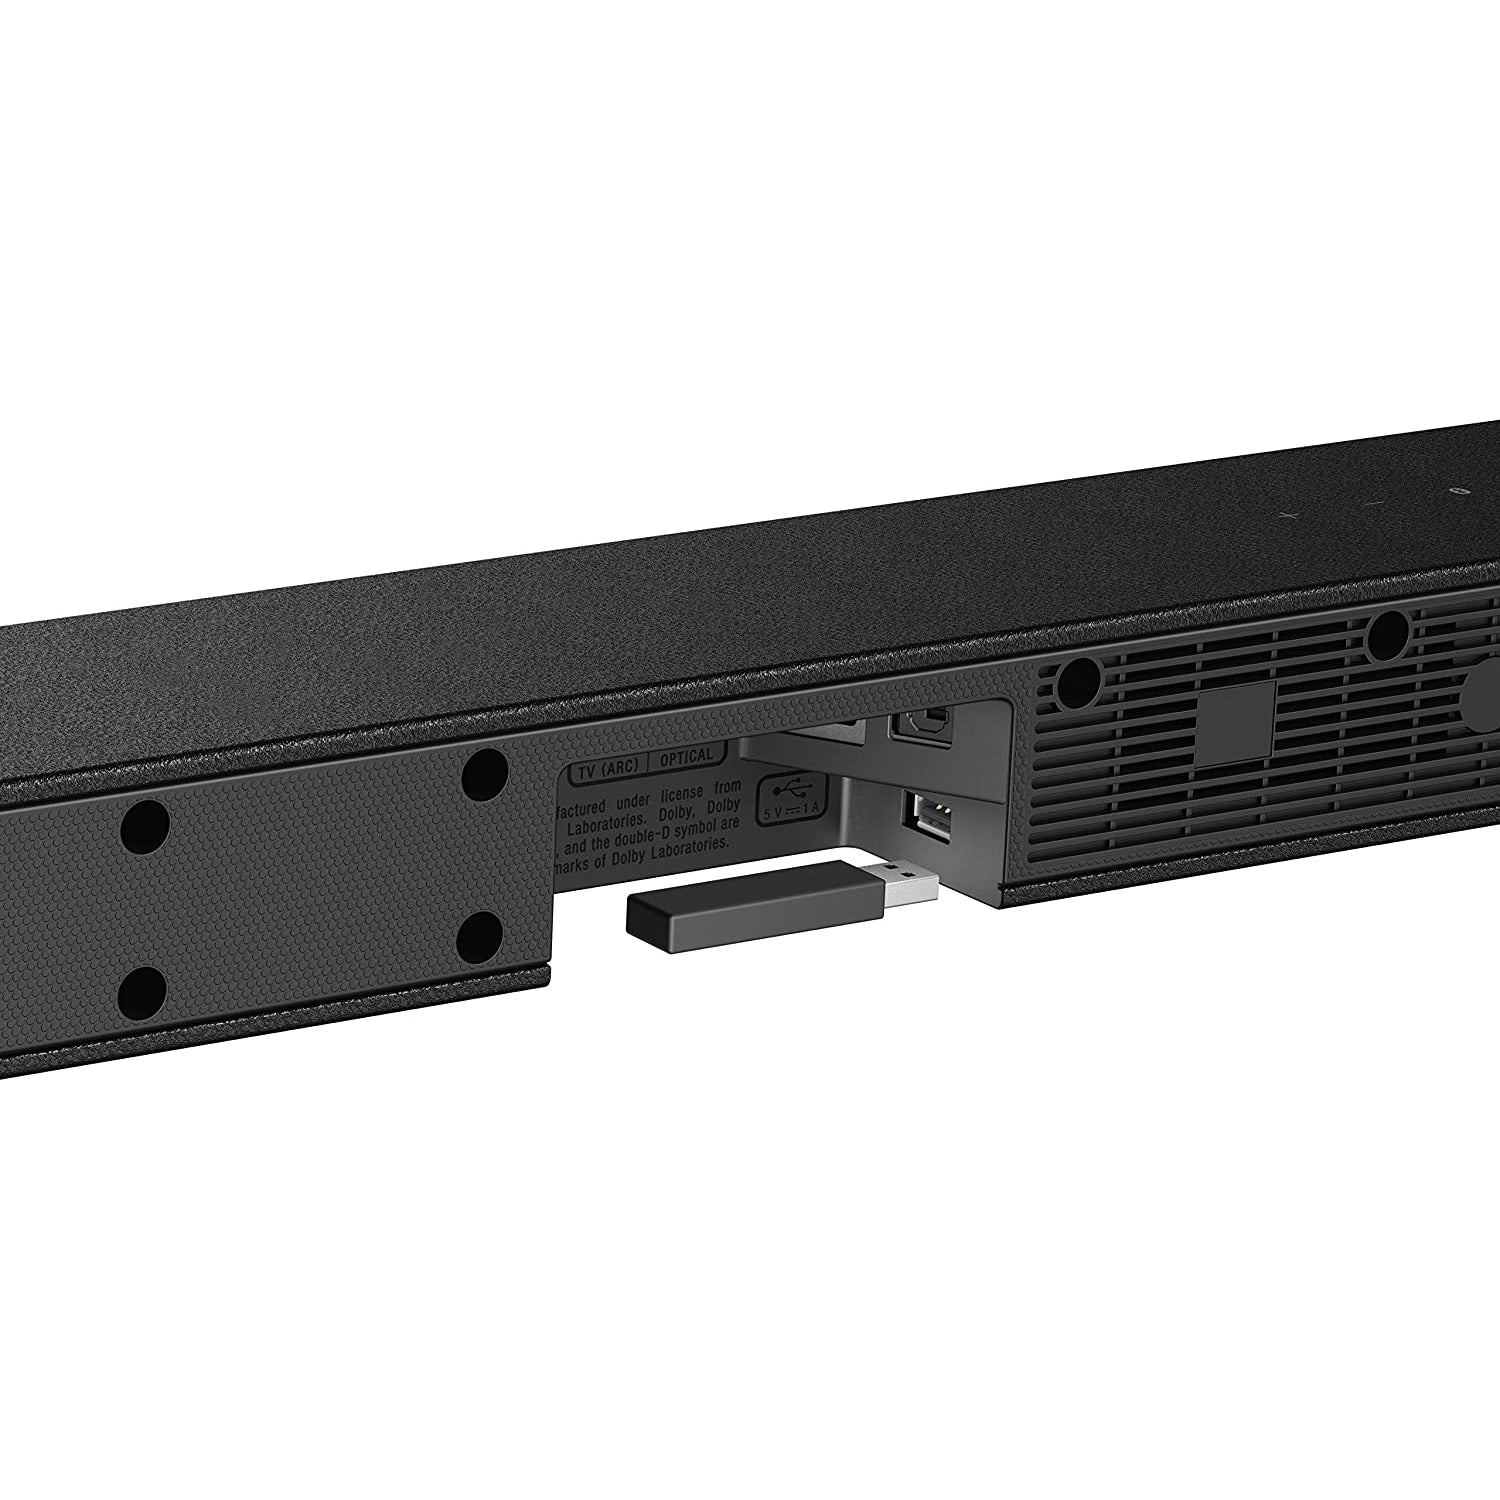 Sony HT-CT290 Ultra-Slim 300W Sound Bar - Grade A